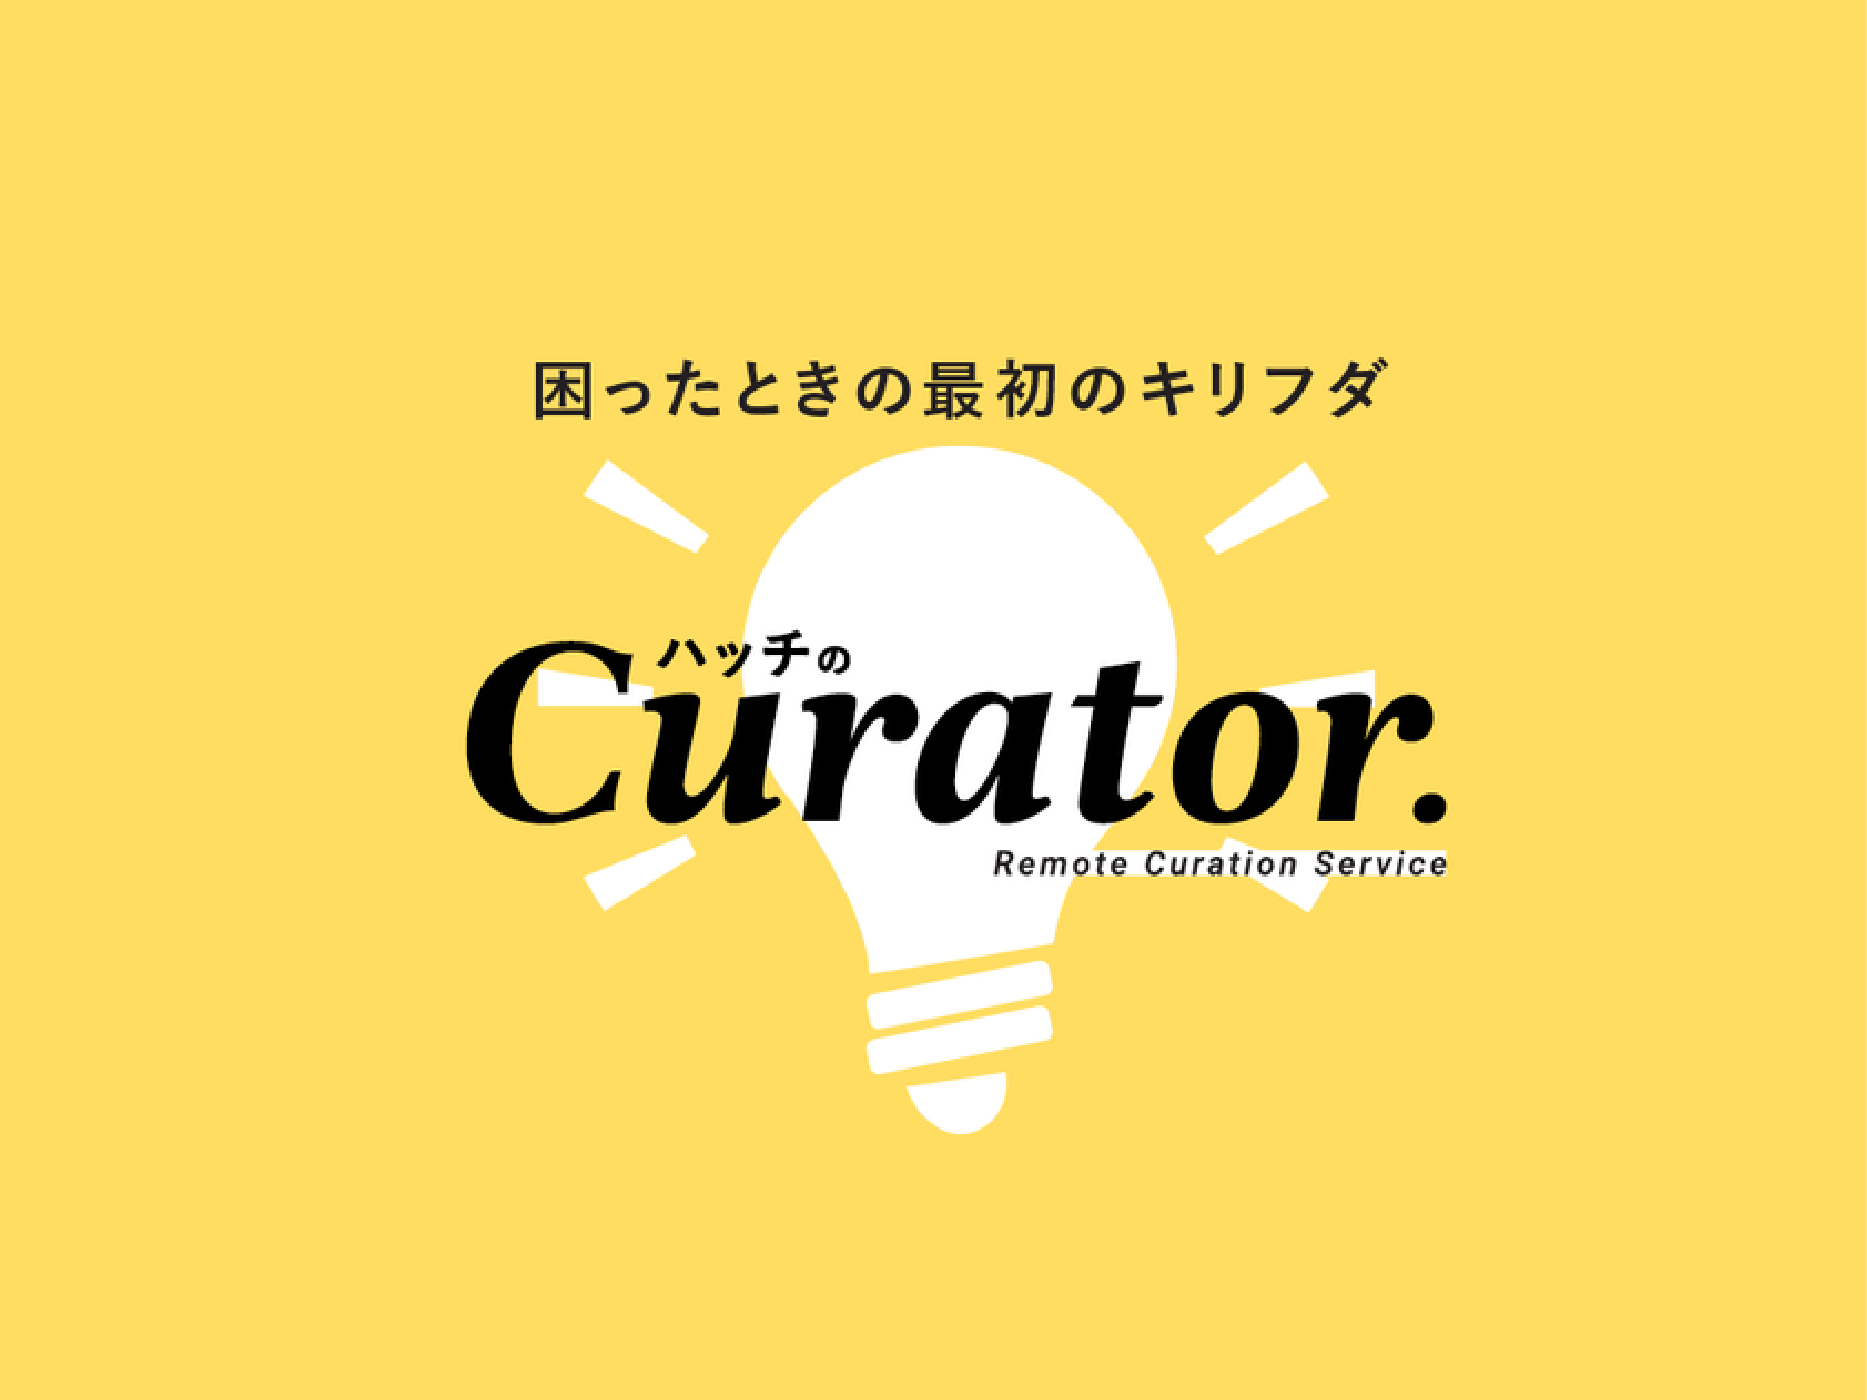 Curator